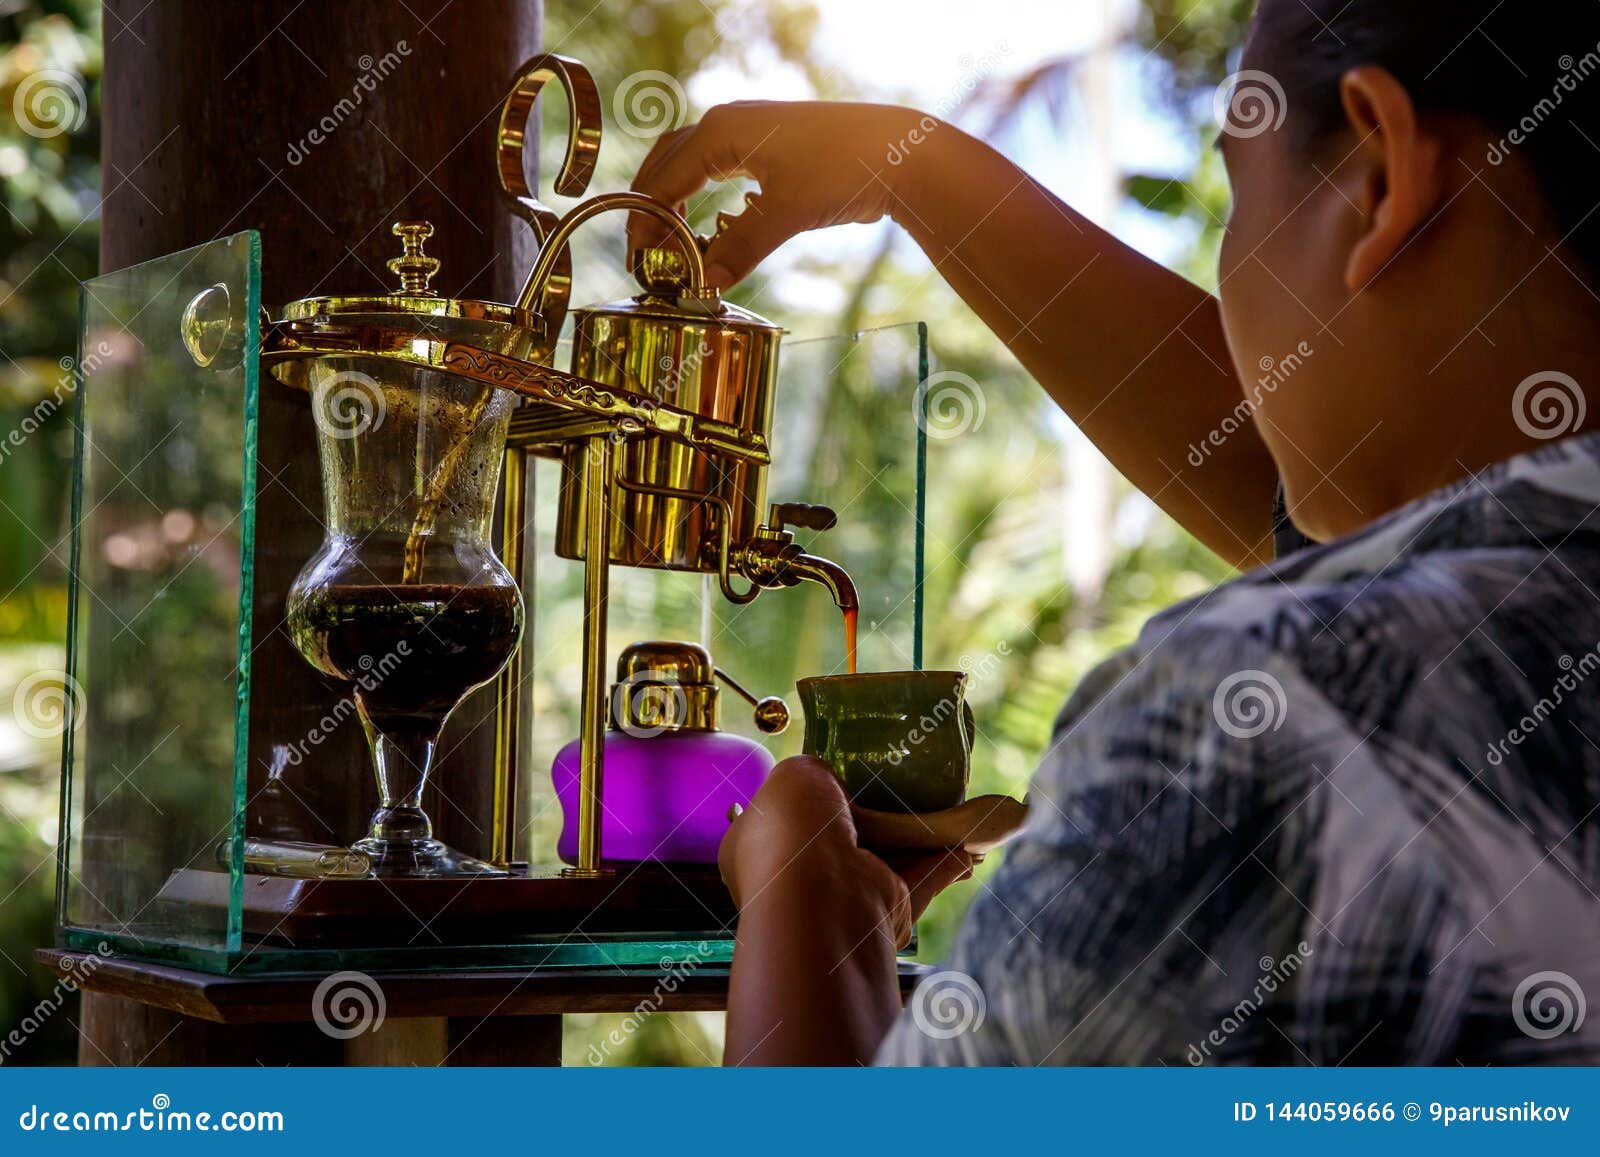 https://thumbs.dreamstime.com/z/making-legendary-coffee-kopi-luwak-vintage-siphon-bali-indonesia-making-legendary-coffee-kopi-luwak-vintage-syphon-bali-144059666.jpg